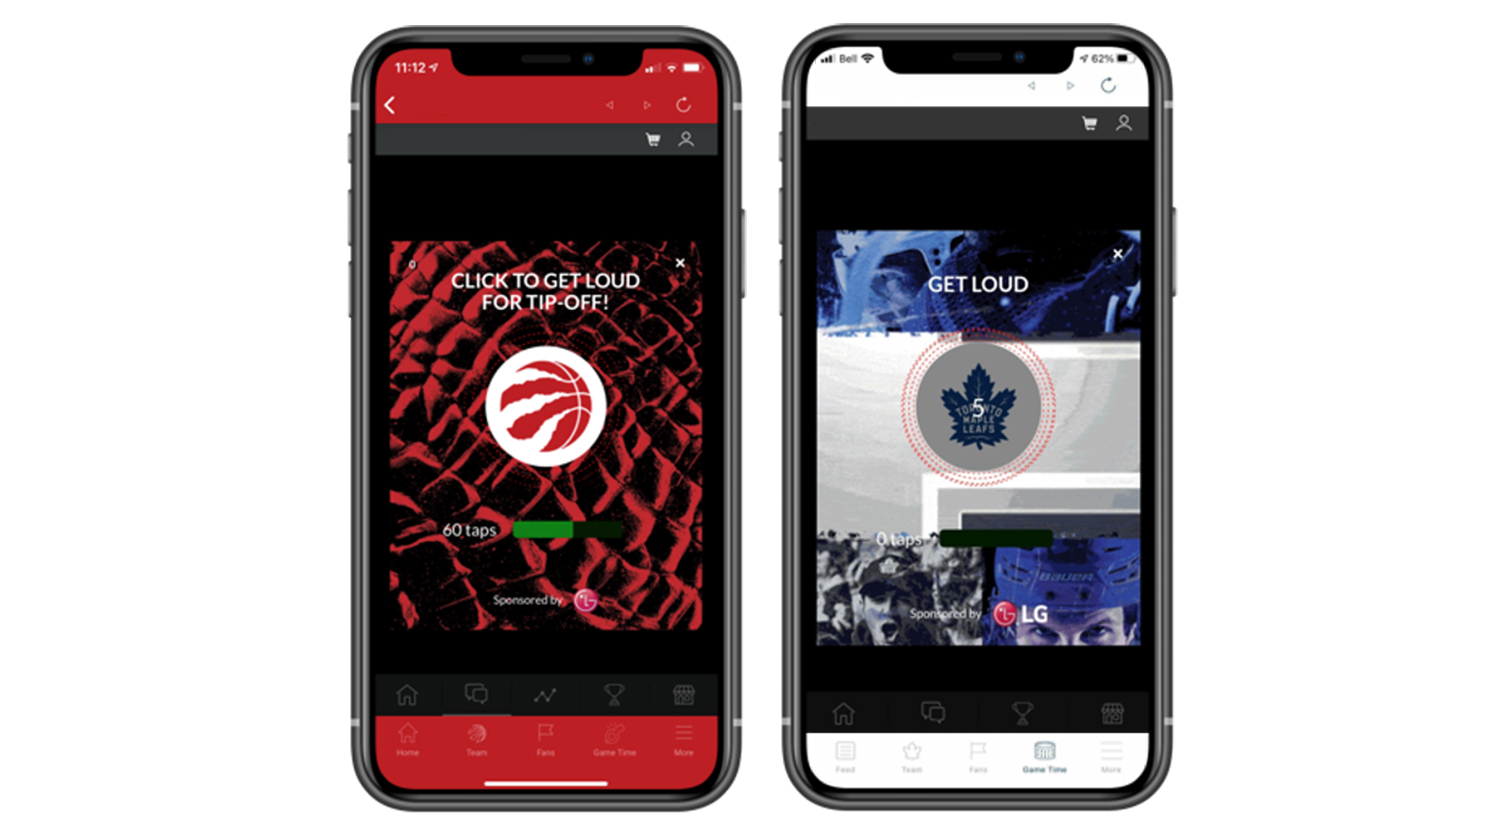 (LEFT) A view of the Toronto Raptors' mobile app. (RIGHT) A view of the Toronto Maple Leafs' mobile app.